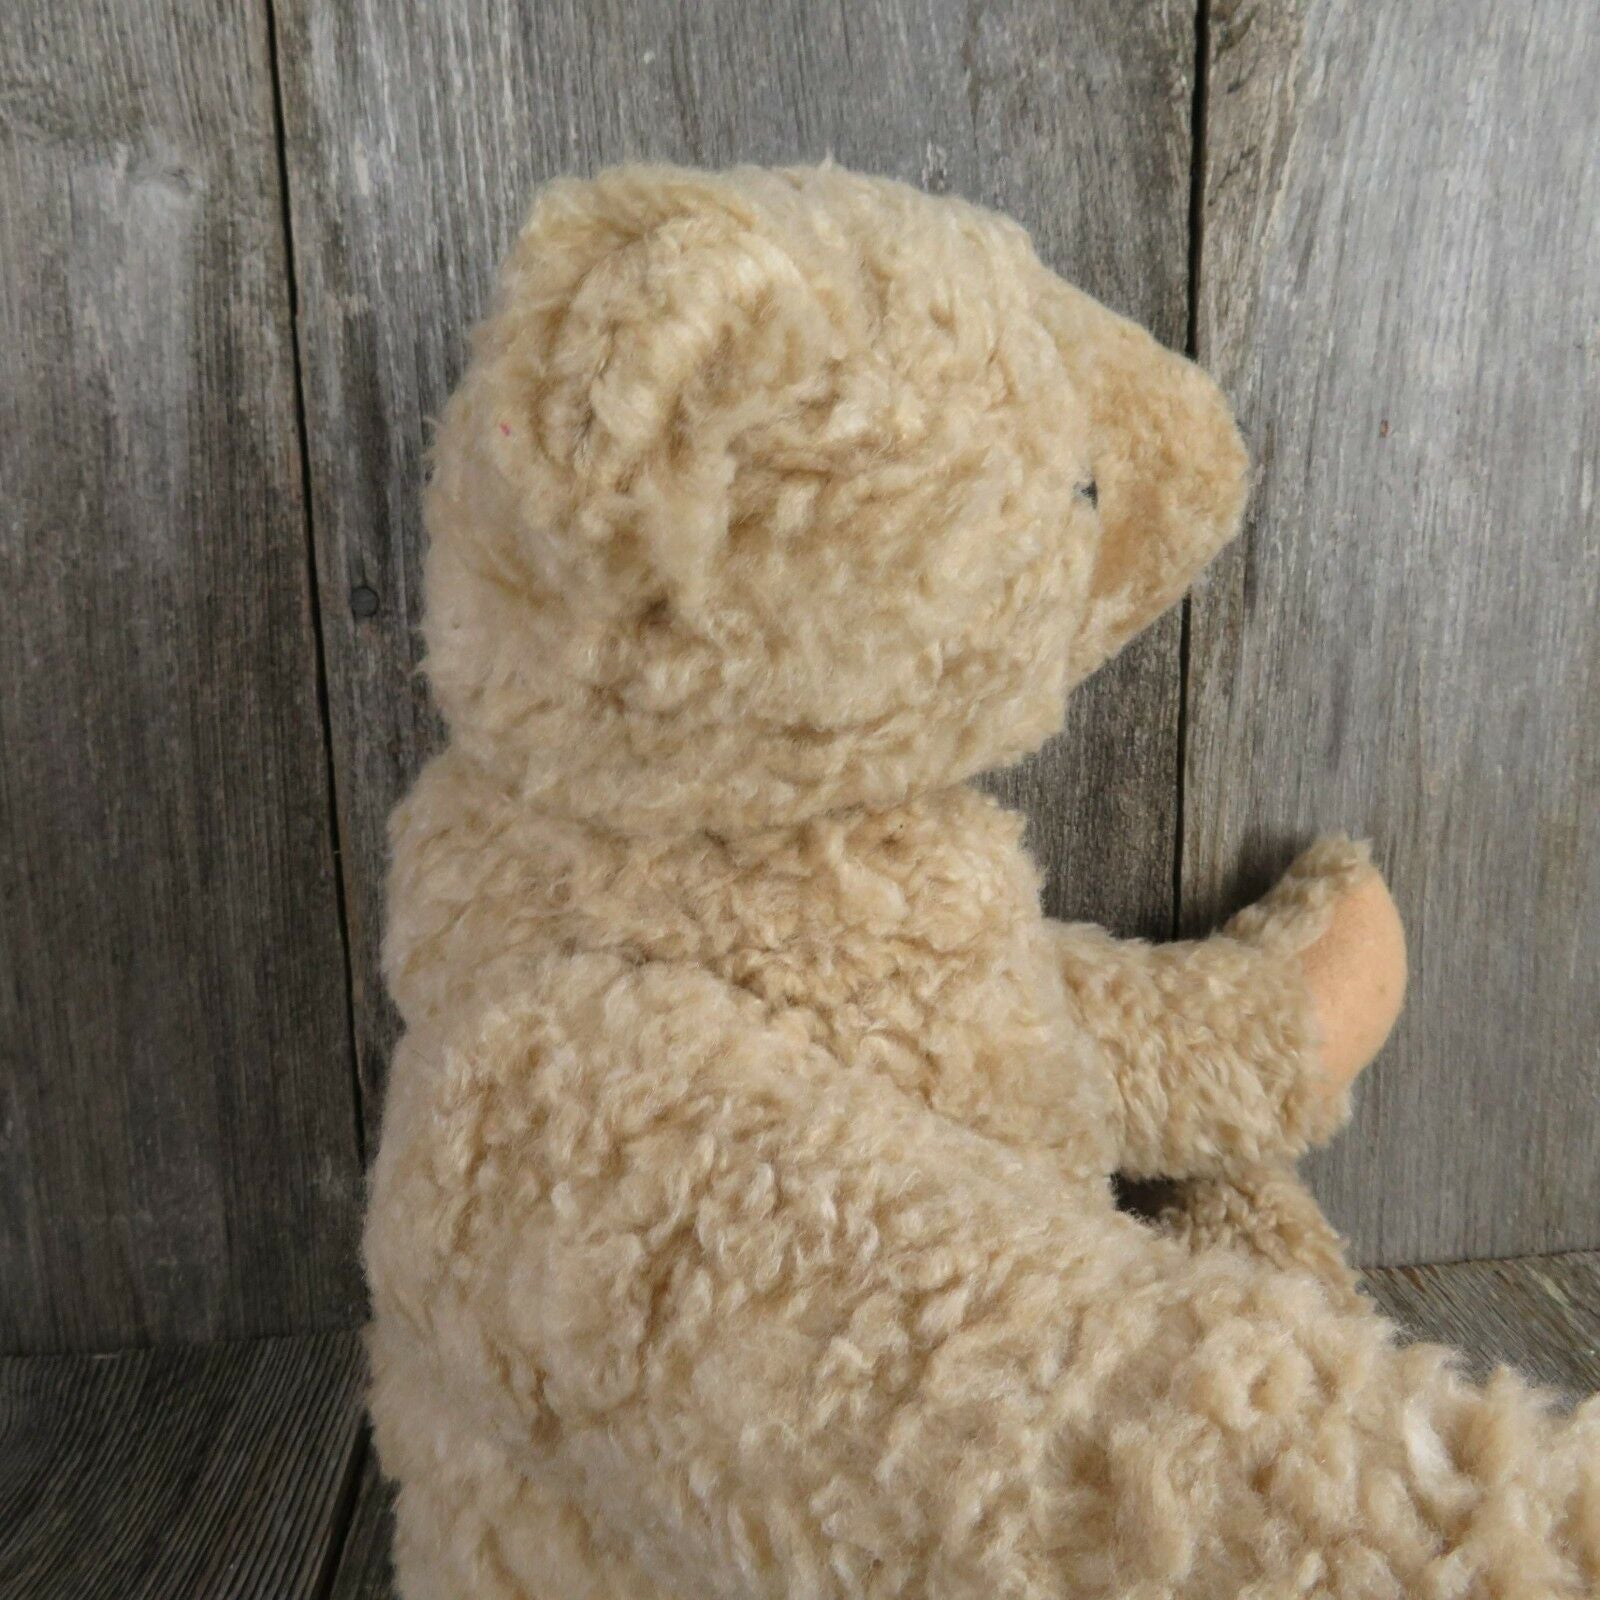 Vintage Jointed Teddy Bear Plush Victorian Memories Joan Greene 1991 Stuffed Animal - At Grandma's Table